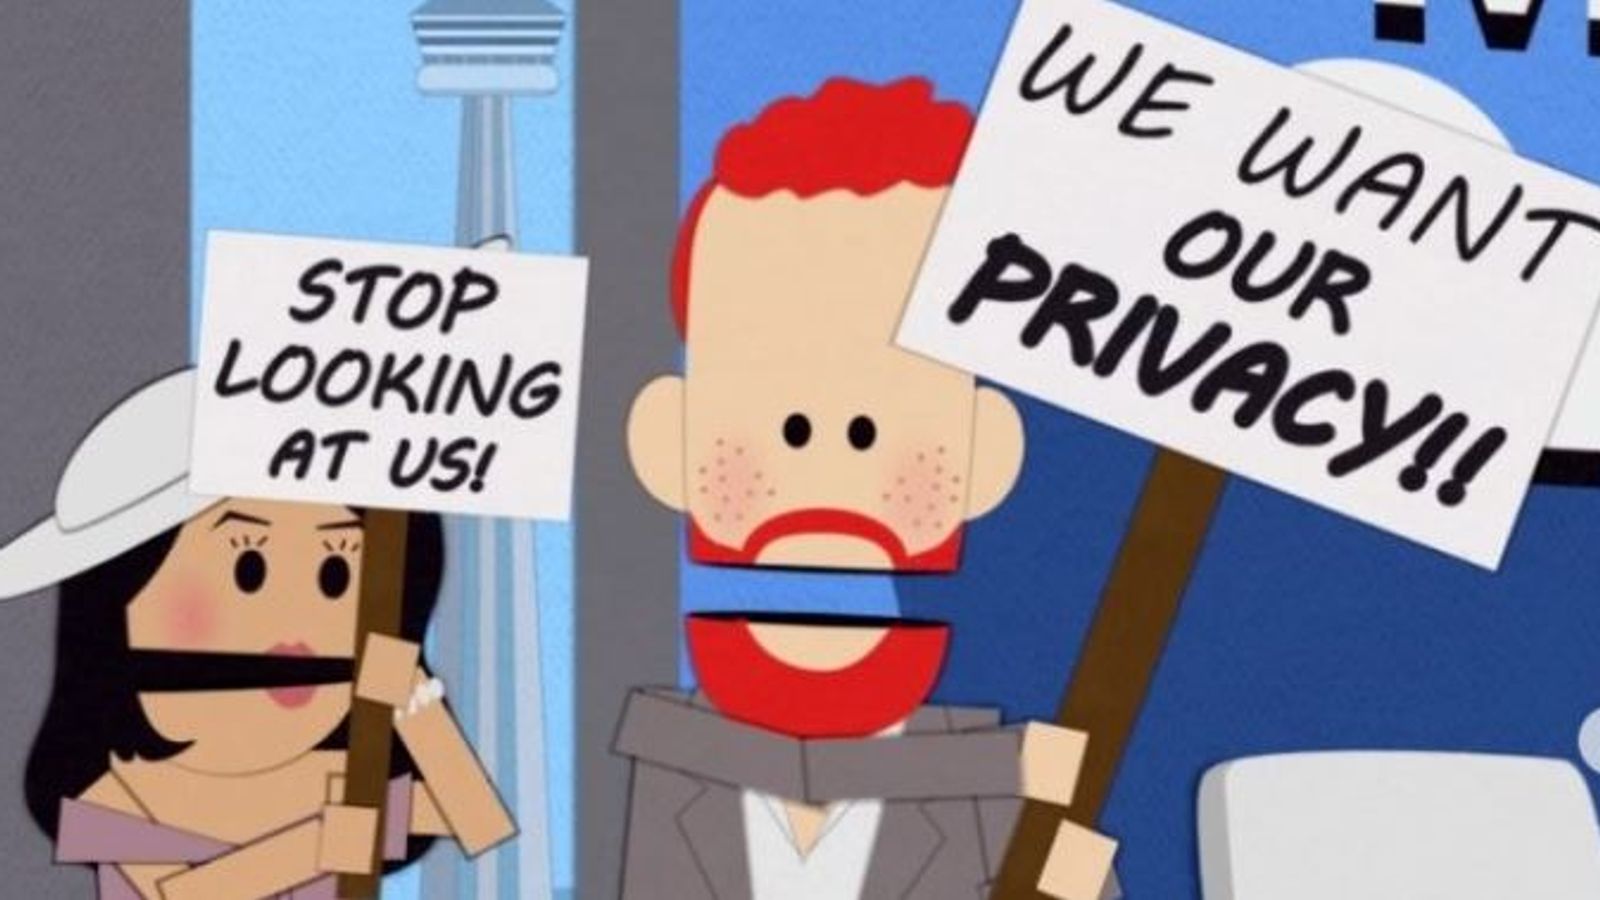 South Park' creators break silence amid Harry, Meghan episode lawsuit  threats